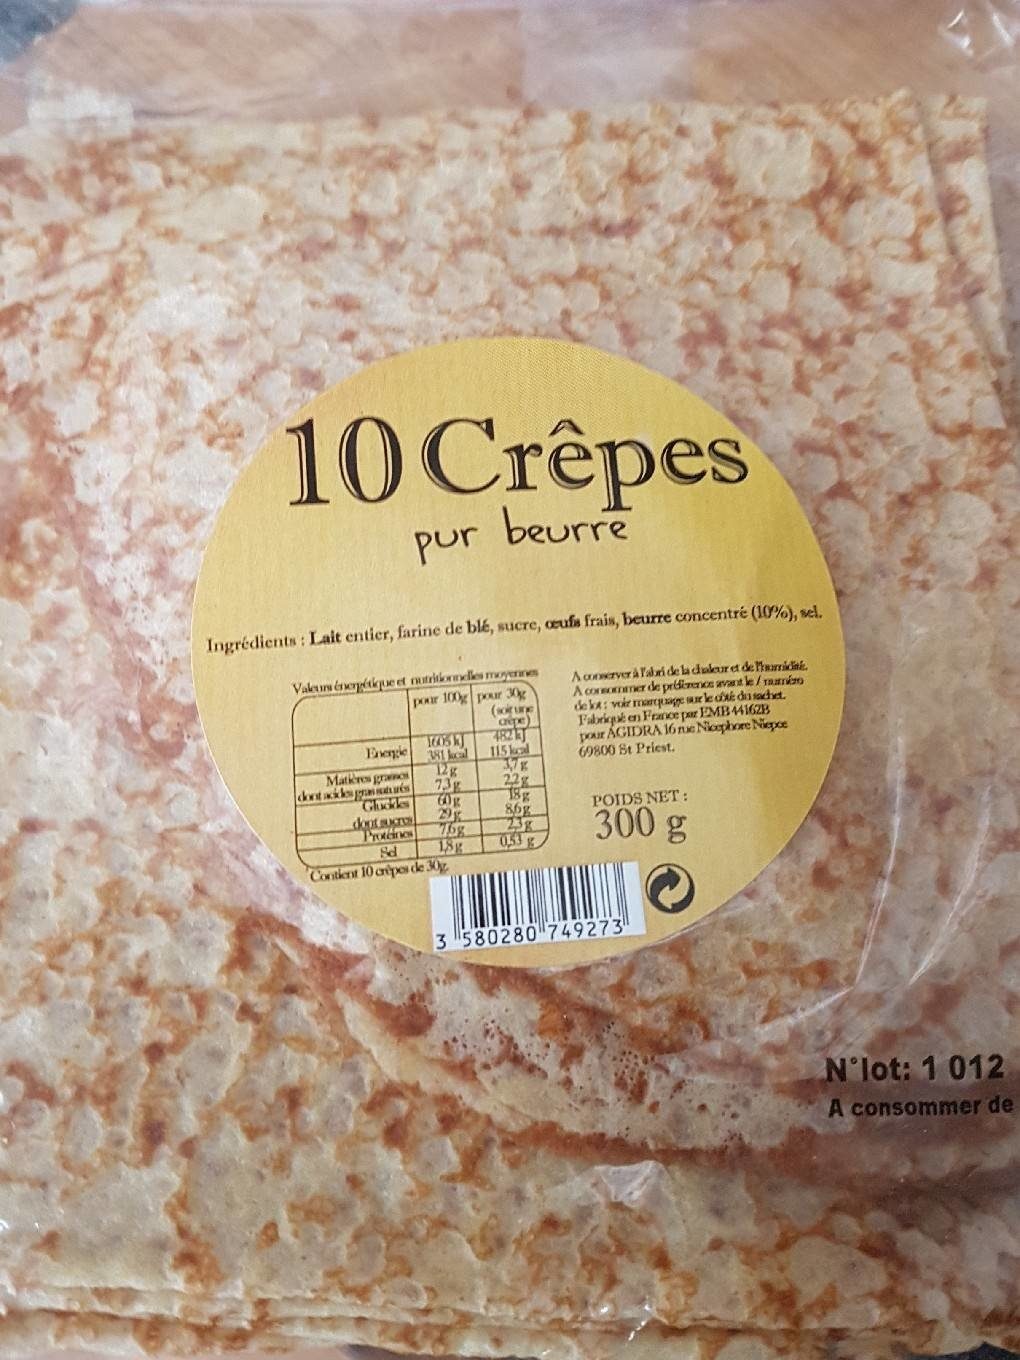 10 Crêpes Pur Beurre - Product - fr